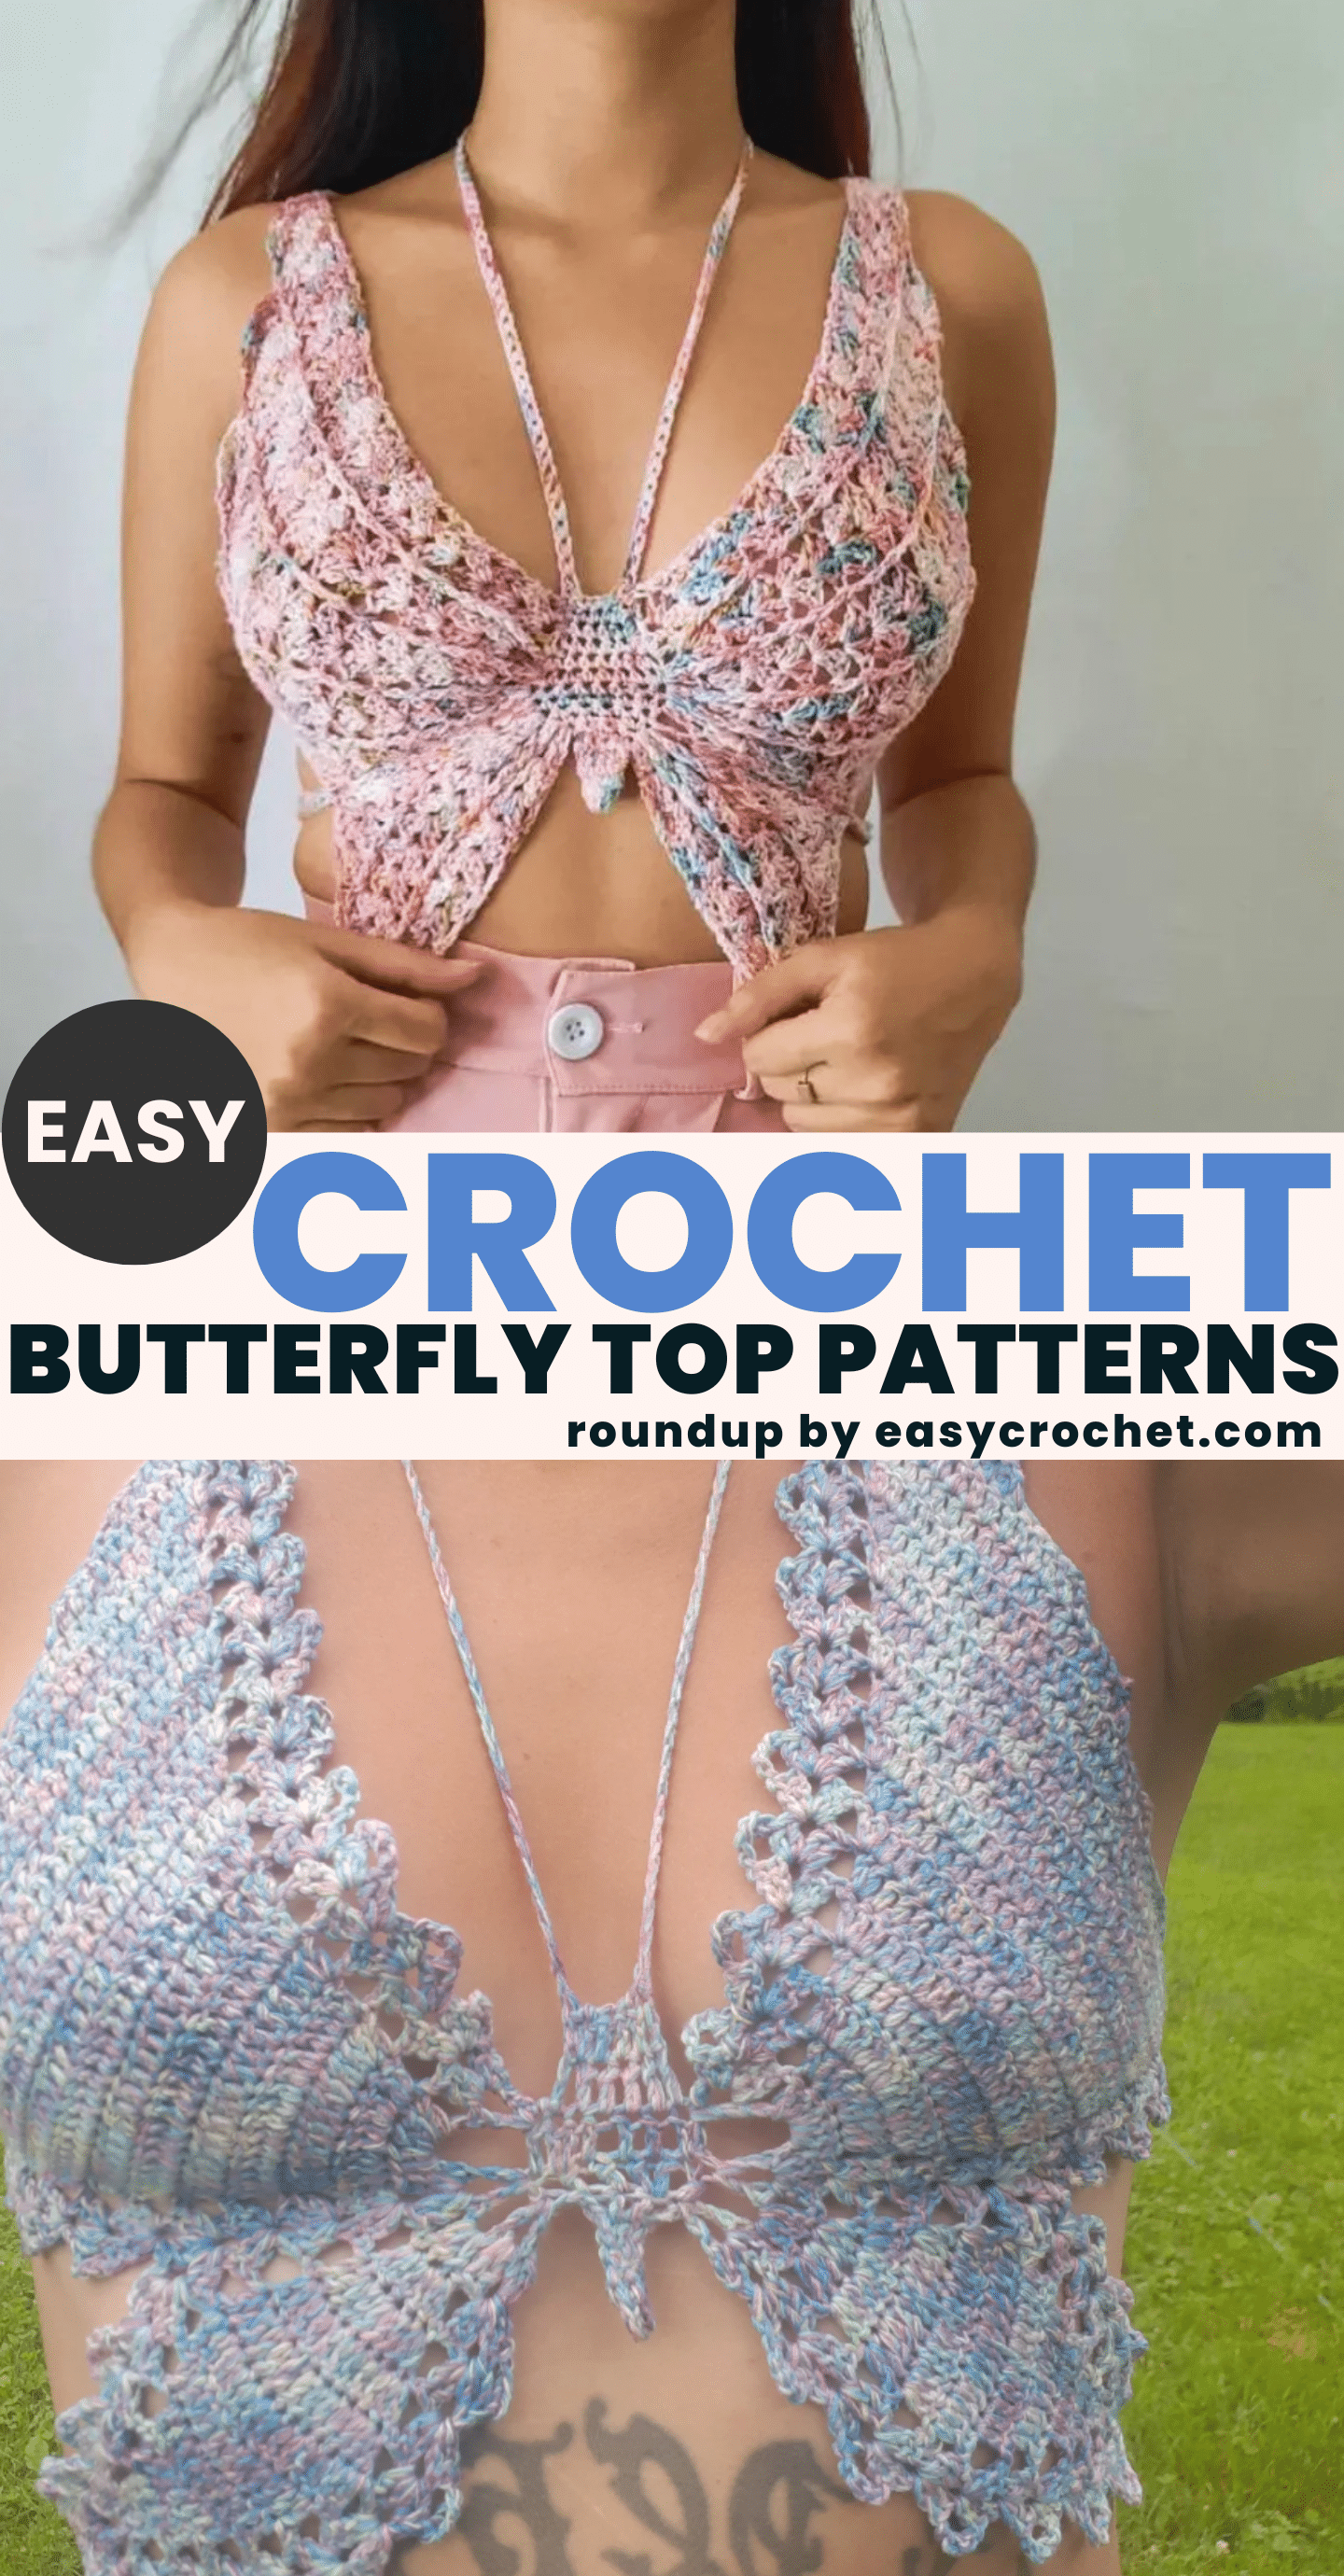 How to choose yarn, take measurements, crochet a bra cup: Crochet Crop Top  Basics - Part 1 